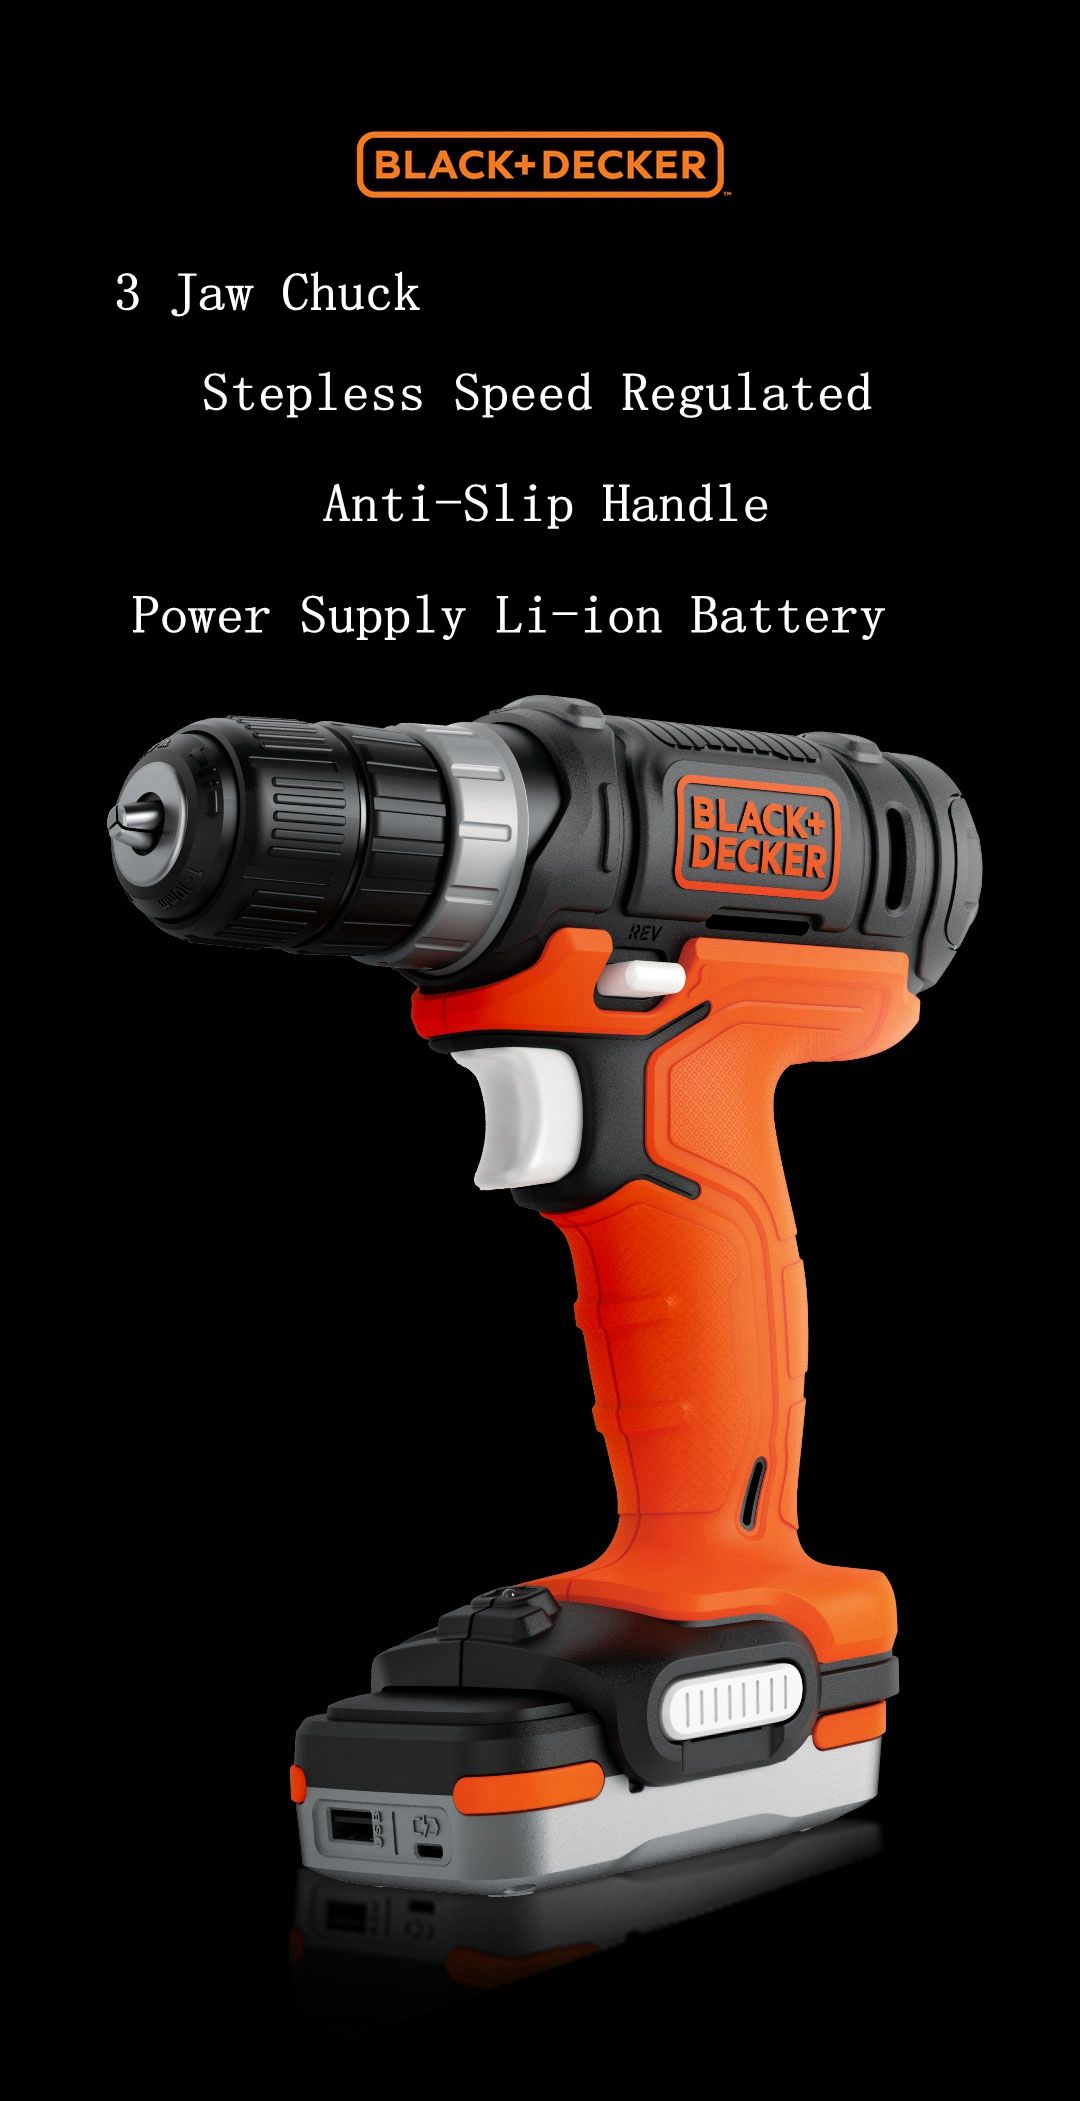 BlackampDecker-12V-Li-ion-USB-Power-Supply-Electric-Drill-Gopack-3-Jaw-Ckuck-Power-Drill-Driver-10mm-1558885